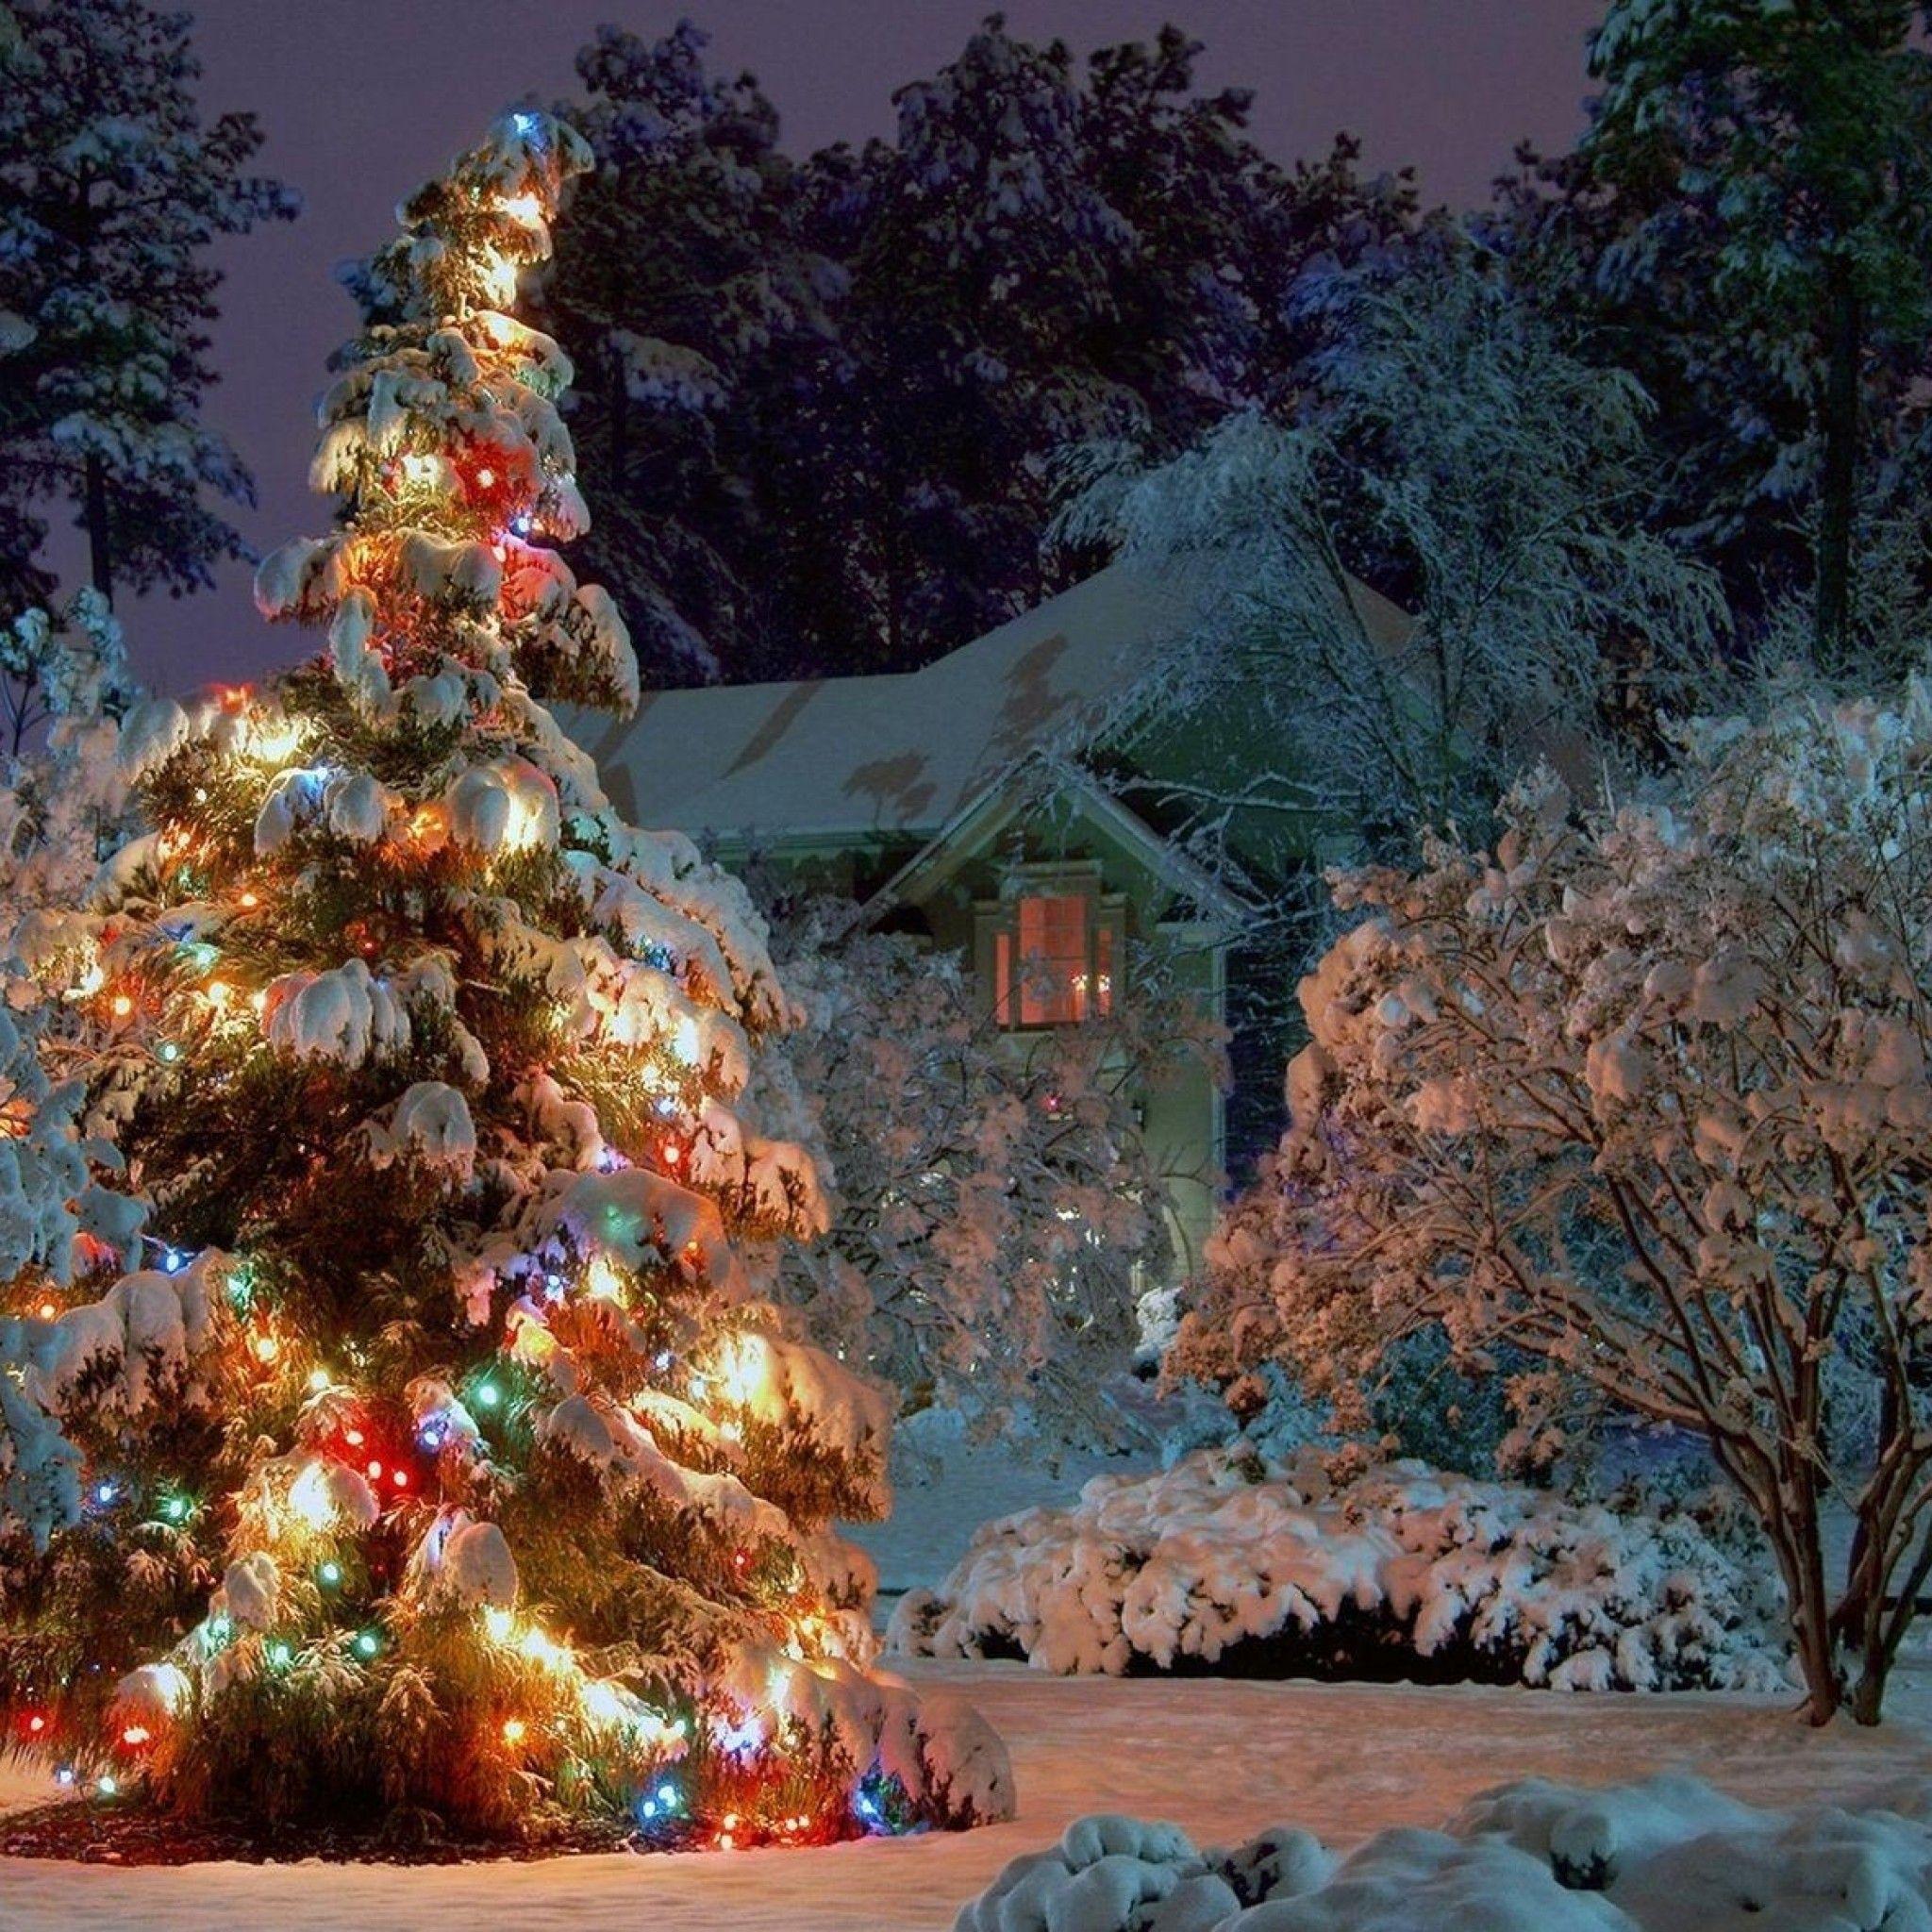 Rustic Christmas Lights Backgrounds ✓ The Decor of Christmas